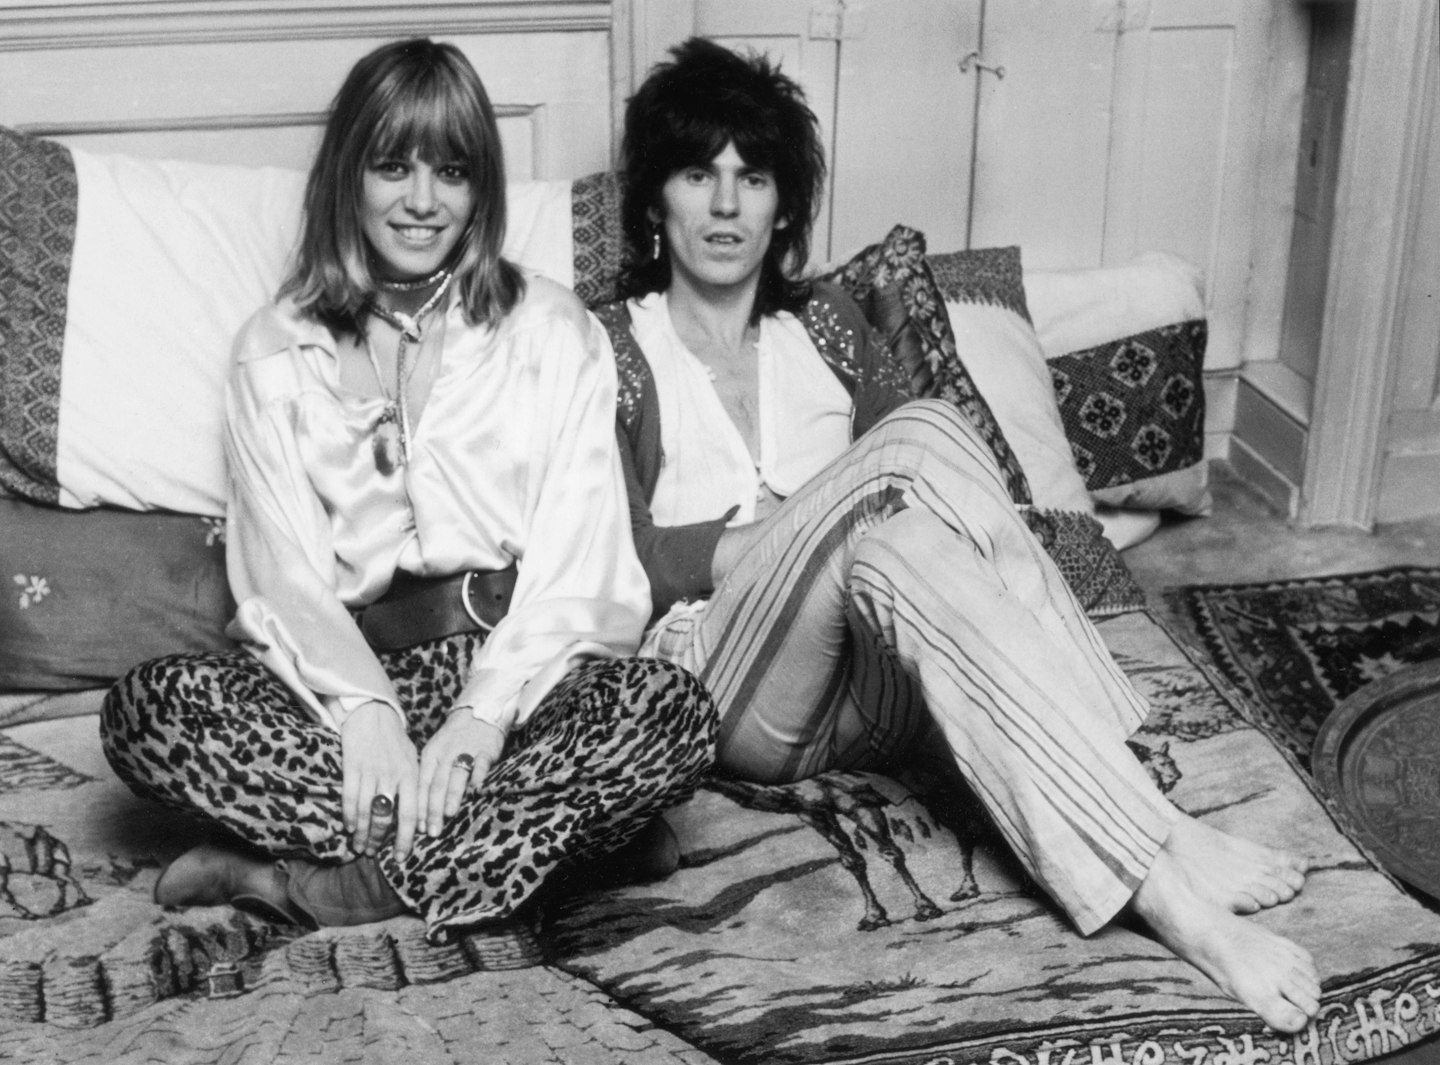 1968 – Keith Richards and Anita Pallenberg